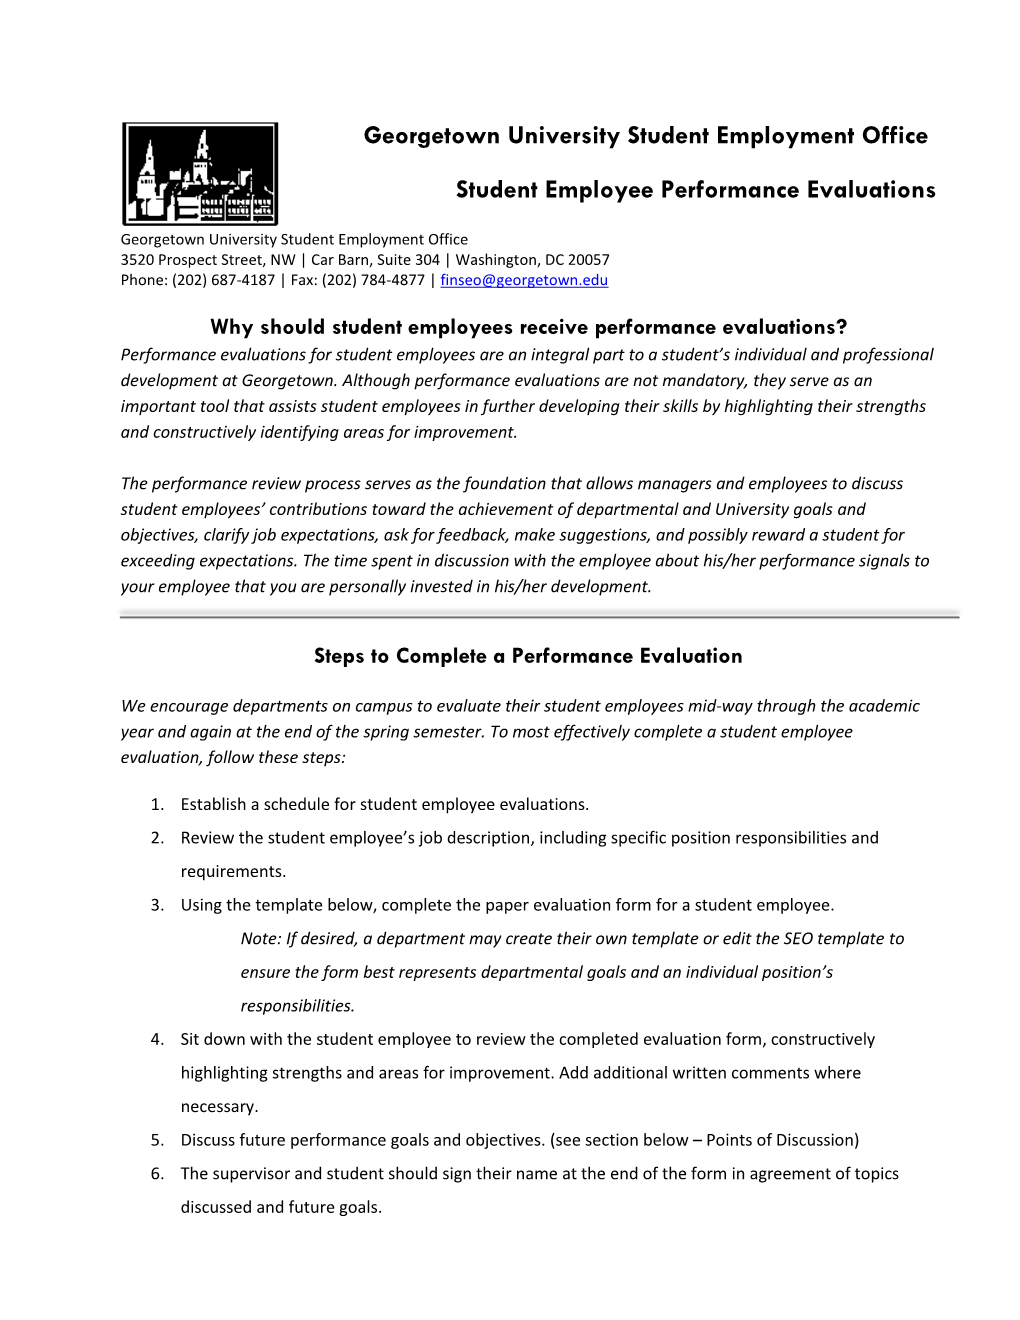 Student Employee Performance Evaluations